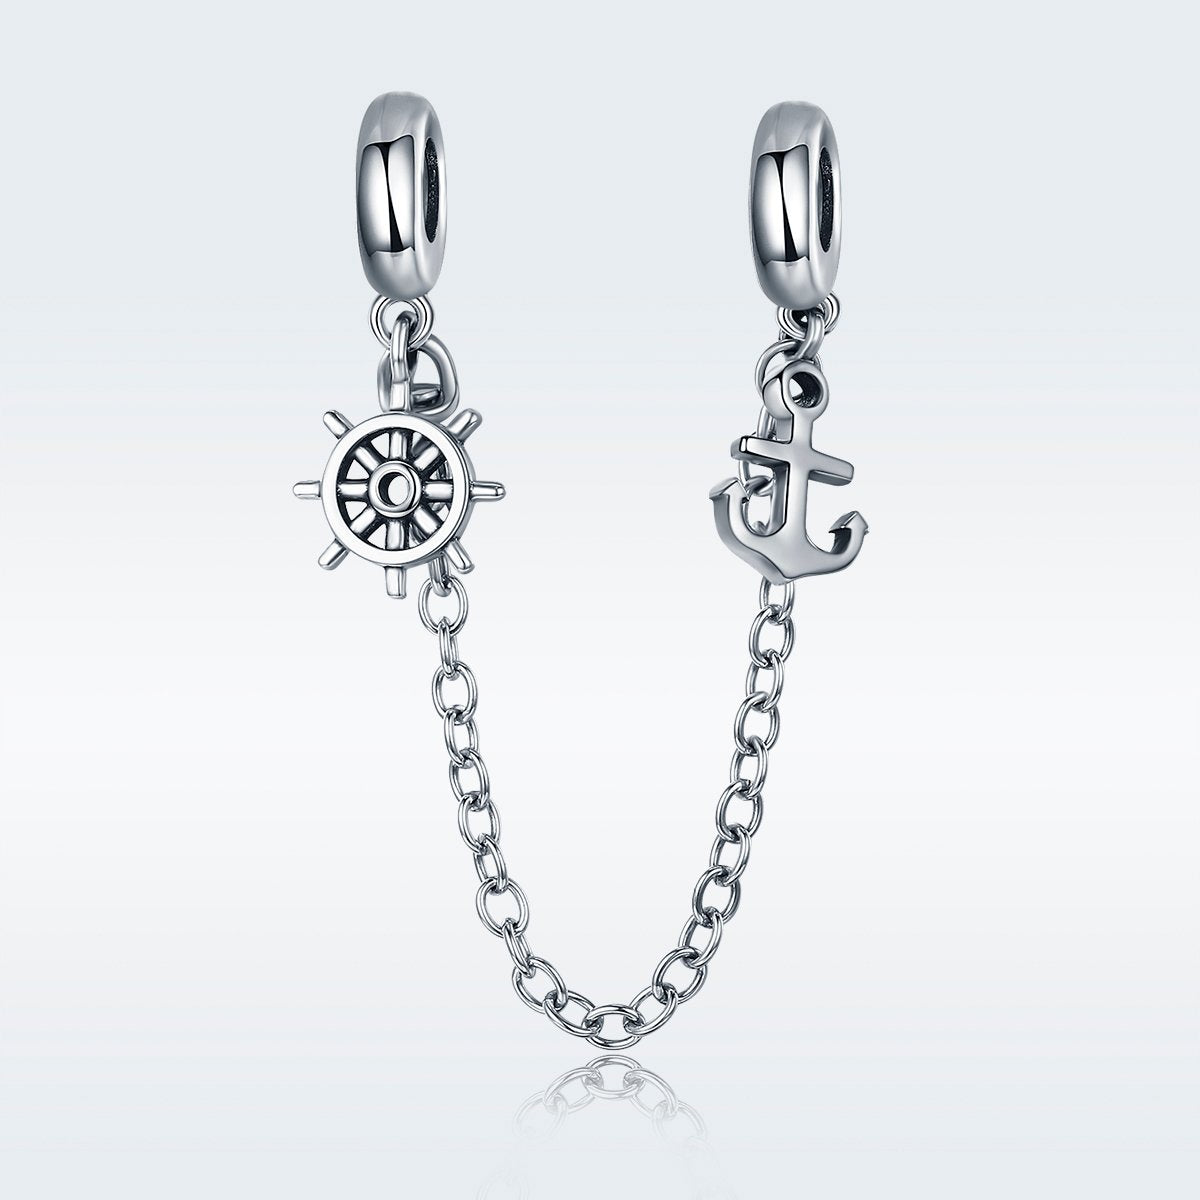 Sterling 925 silver charm the rudder n anchor secure chain bead pendant fits Pandora charm and European charm bracelet Xaxe.com